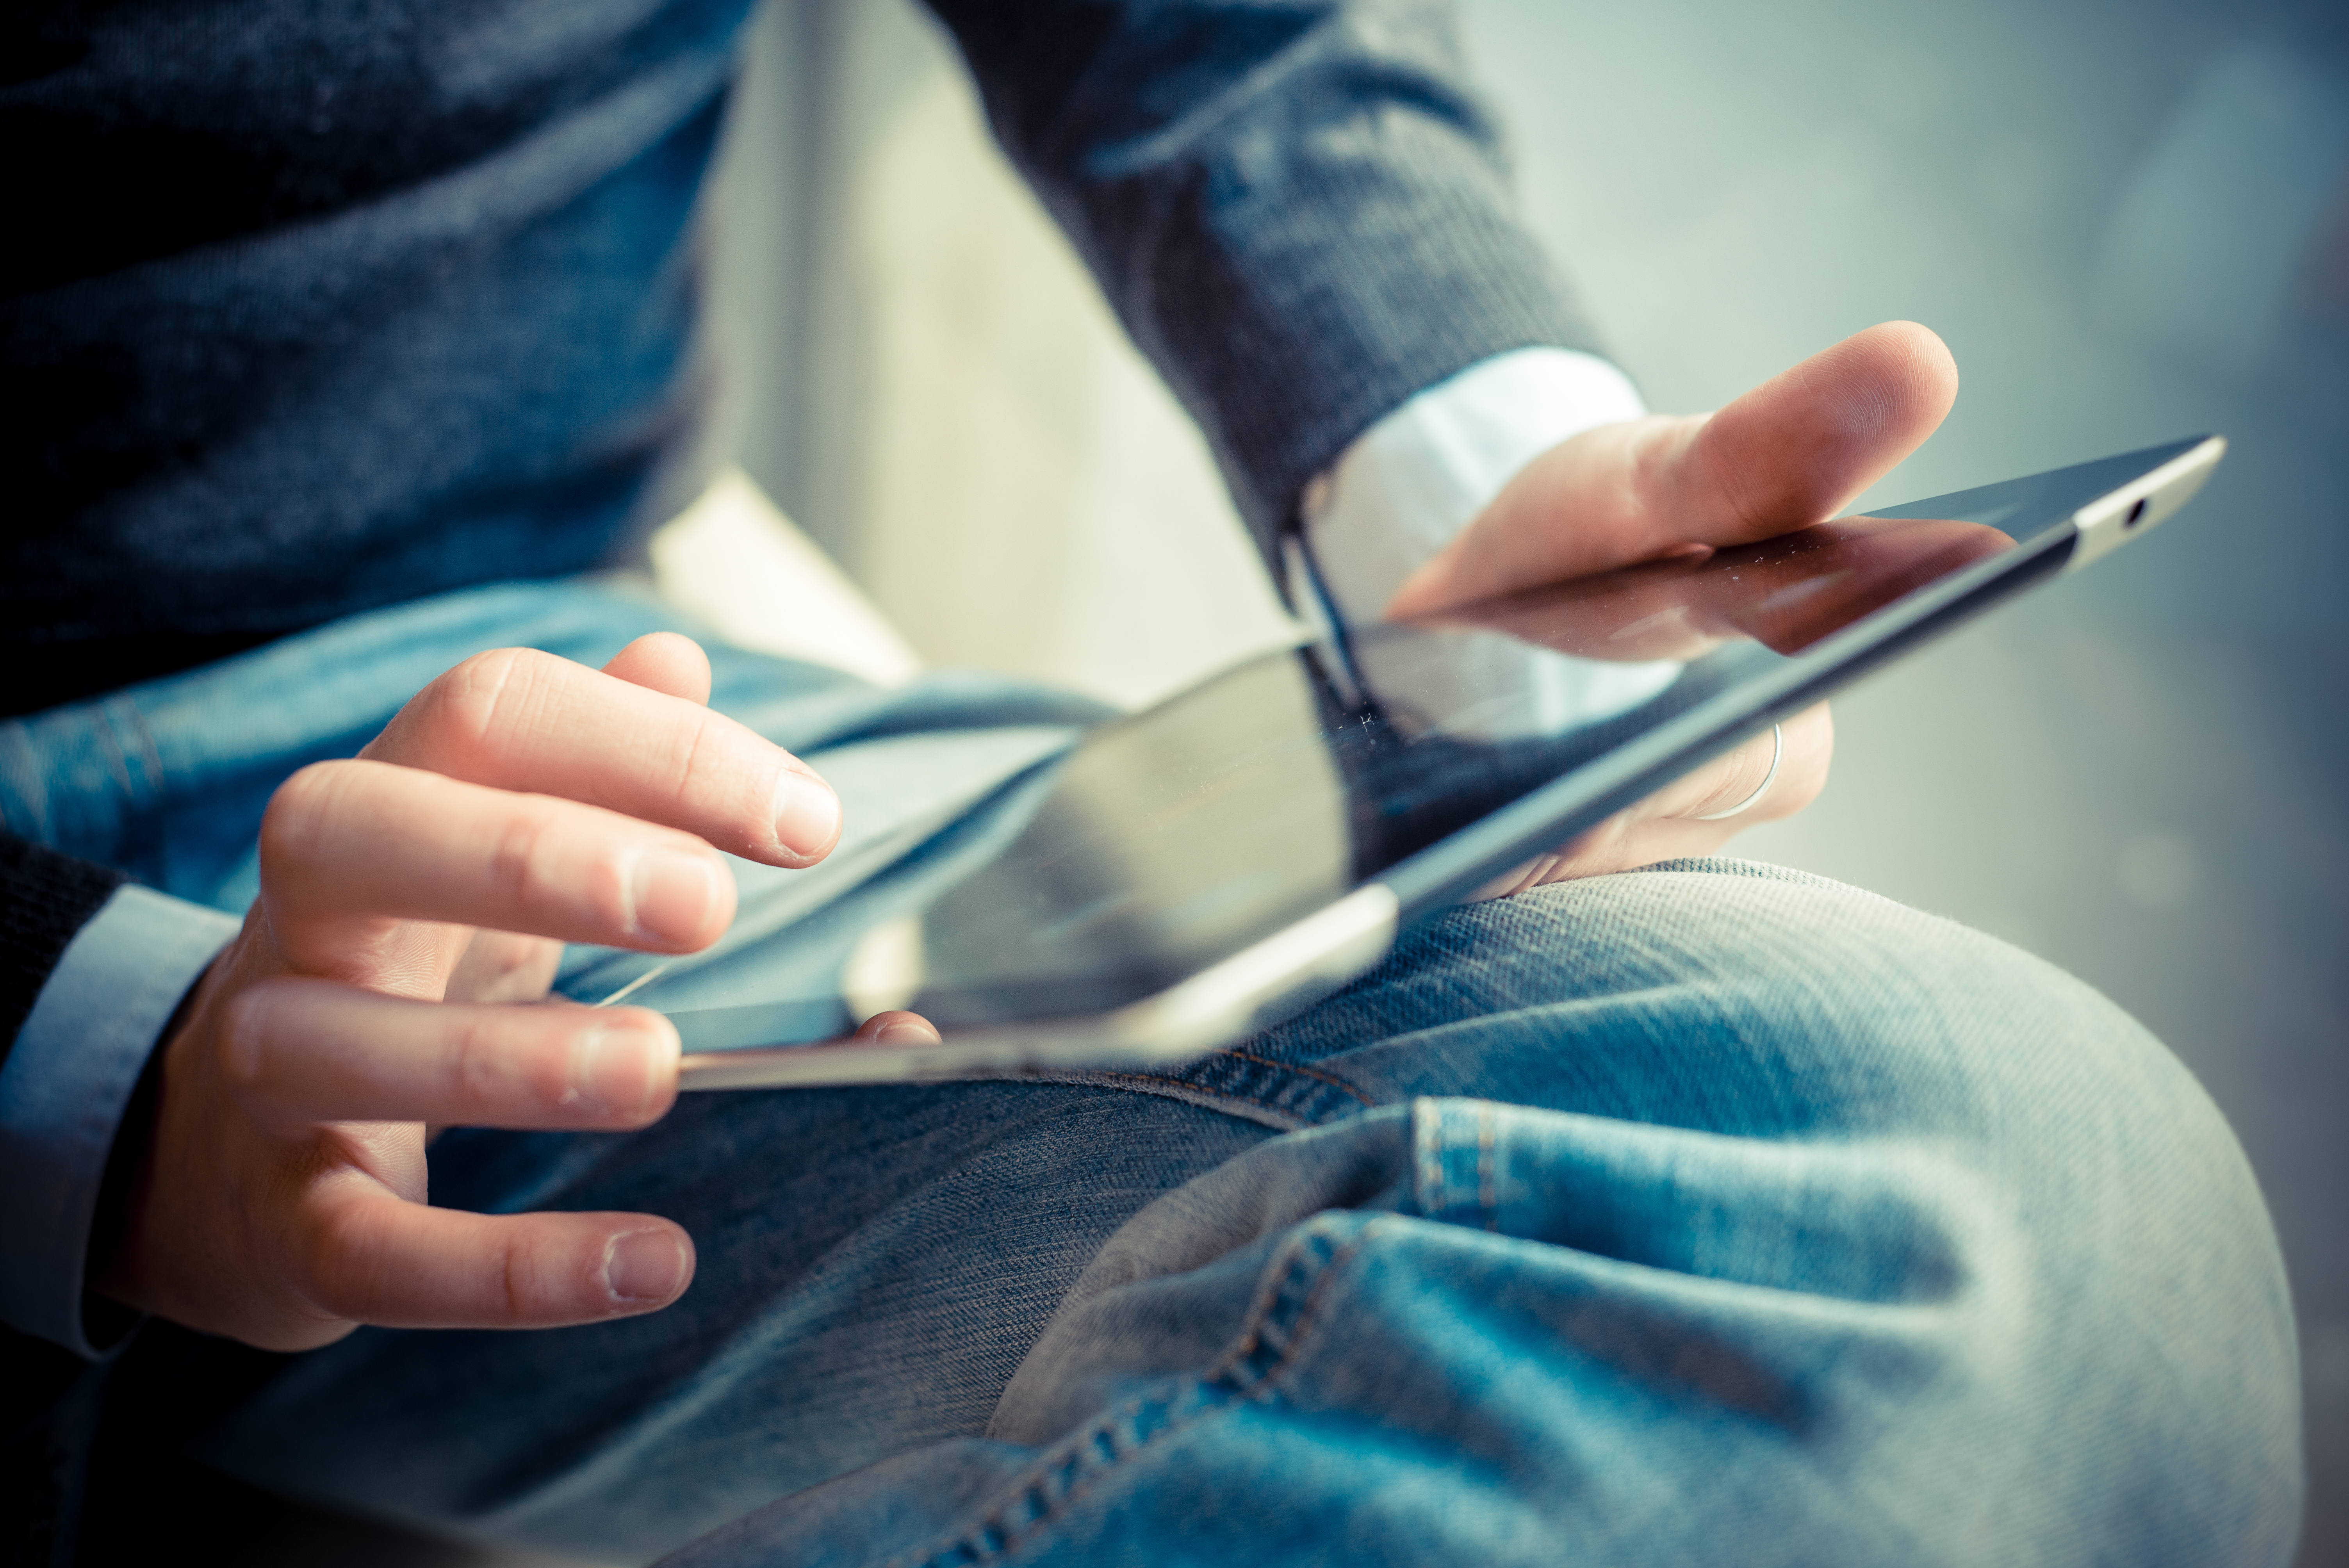 A man using a tablet | Source: Shutterstock